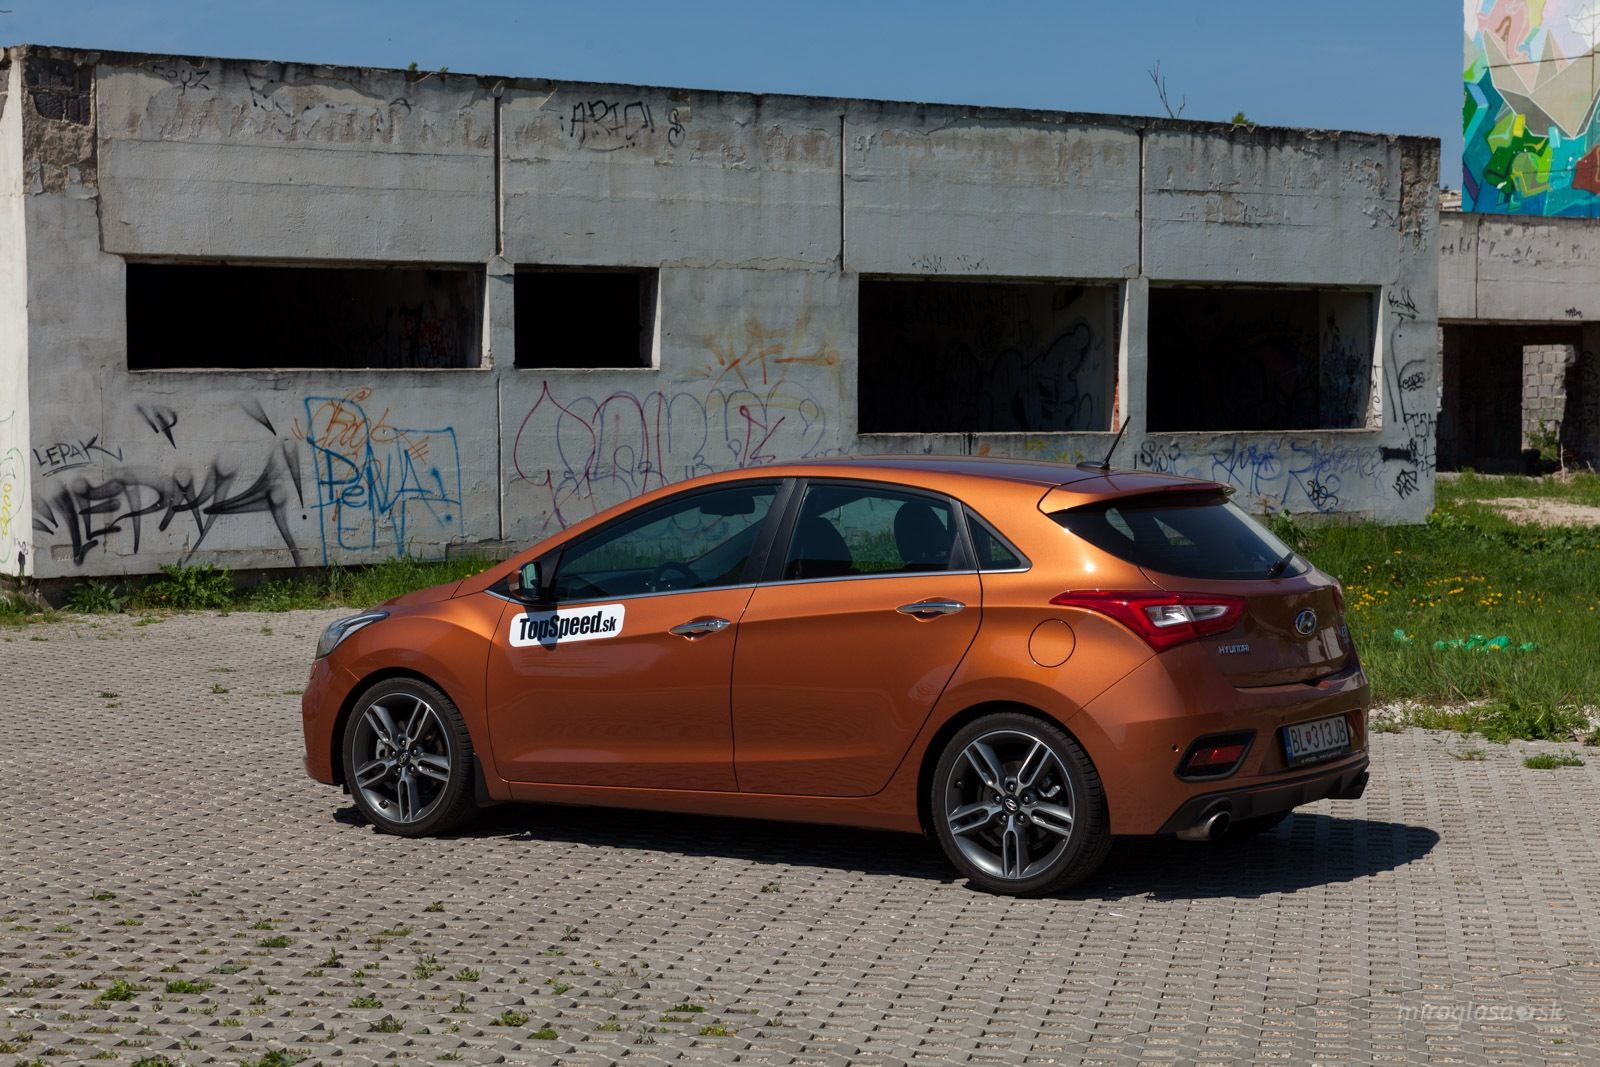 TopSpeed.sk test - Hyundai i30 turbo